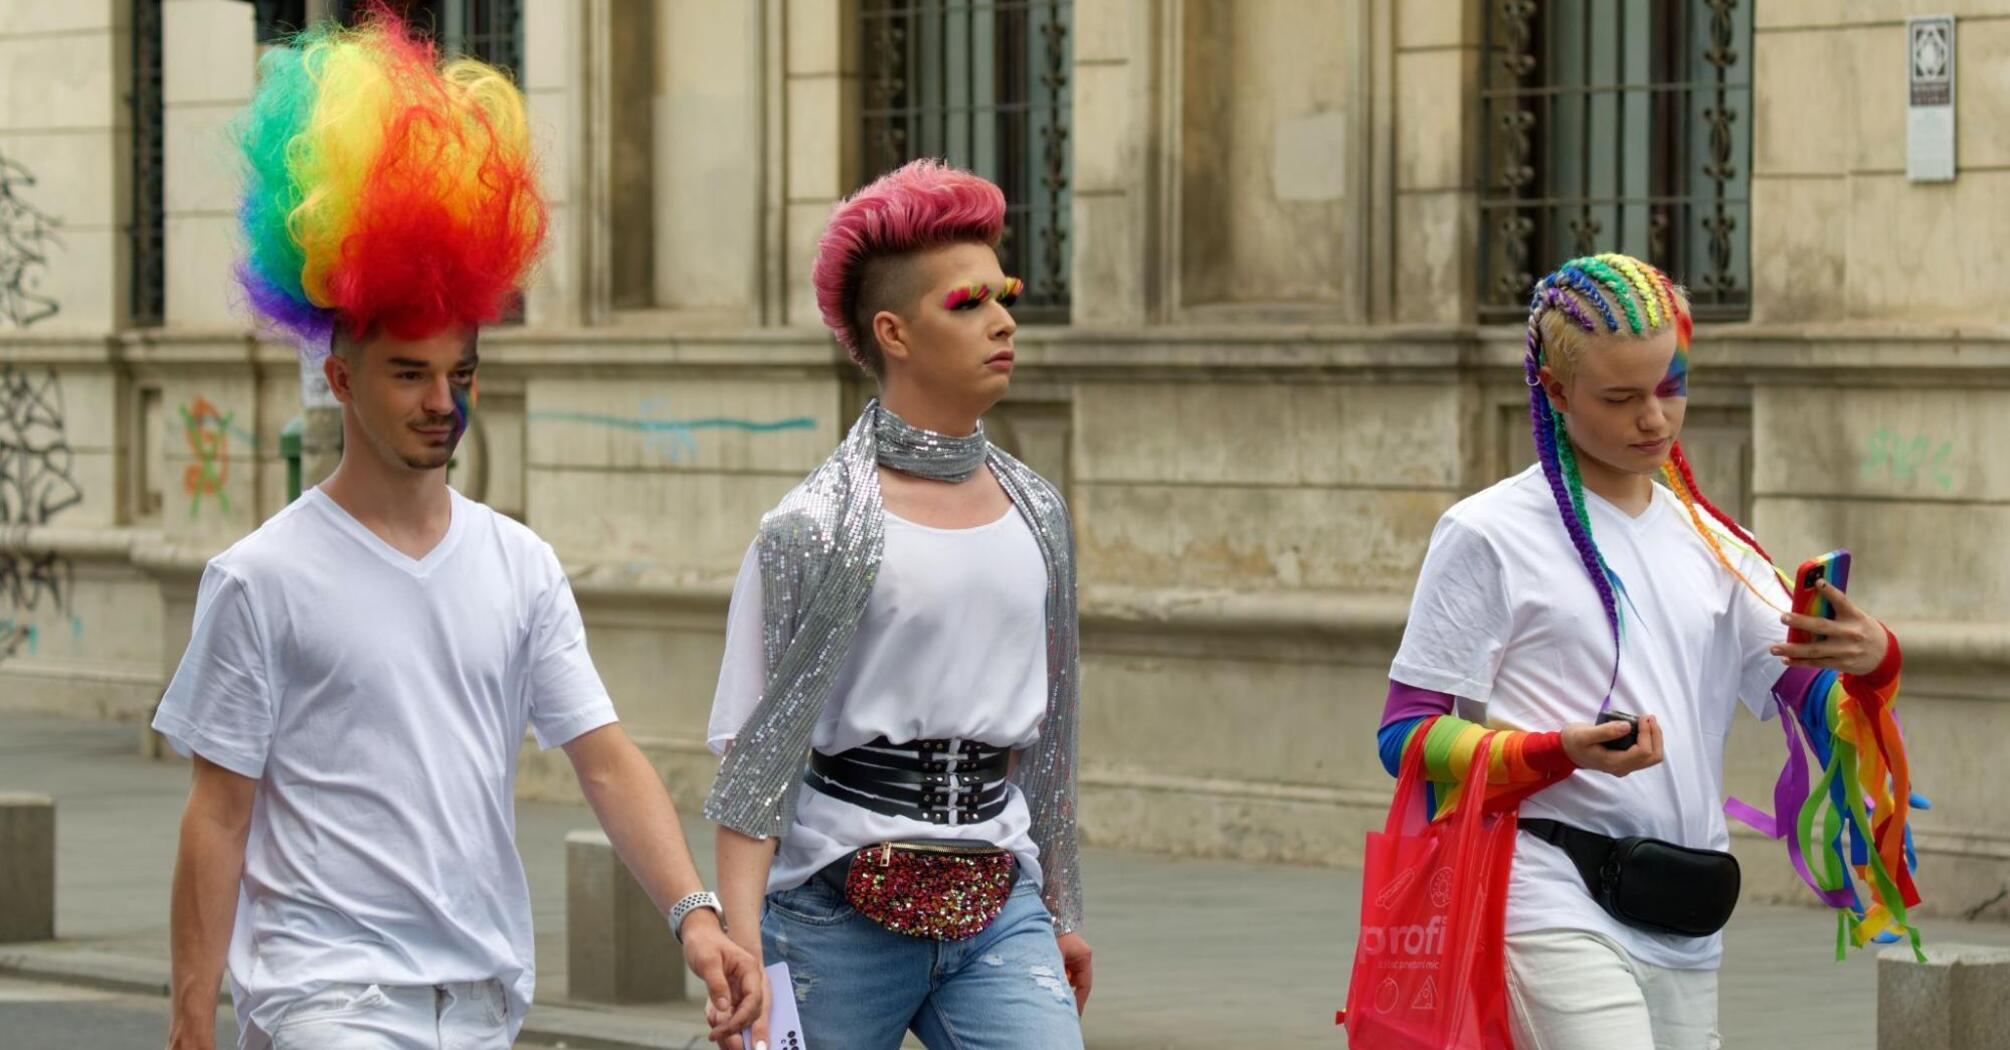 Pride Parade members on the Street